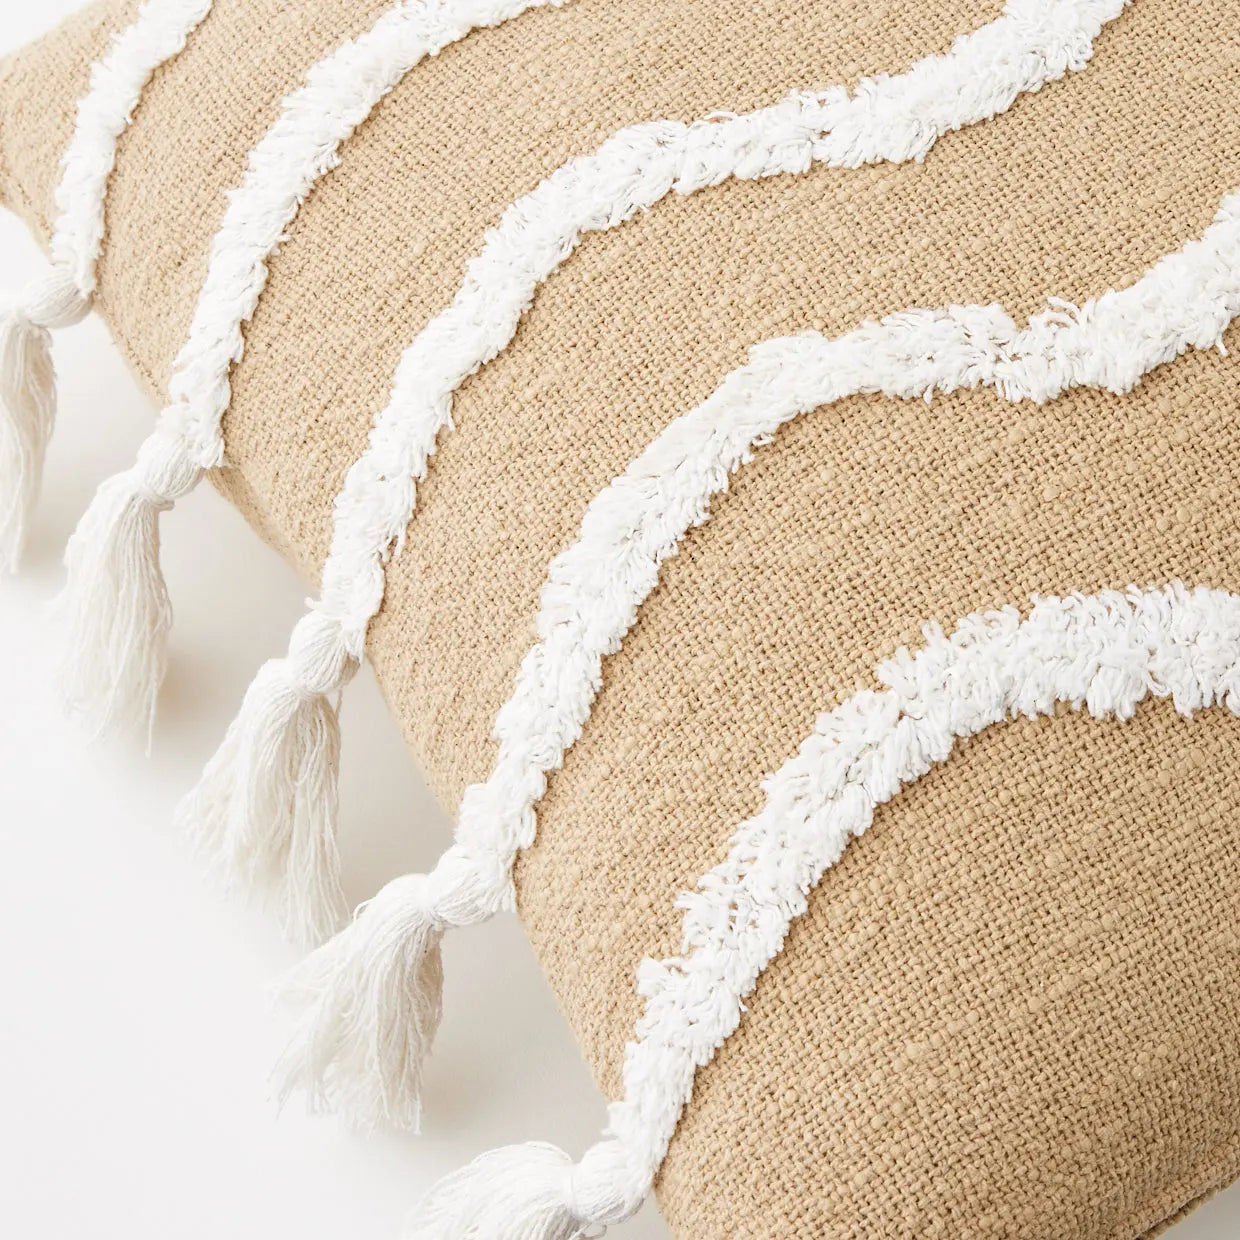 Newport Cotton Cushion with Insert Natural/White - GigiandTom